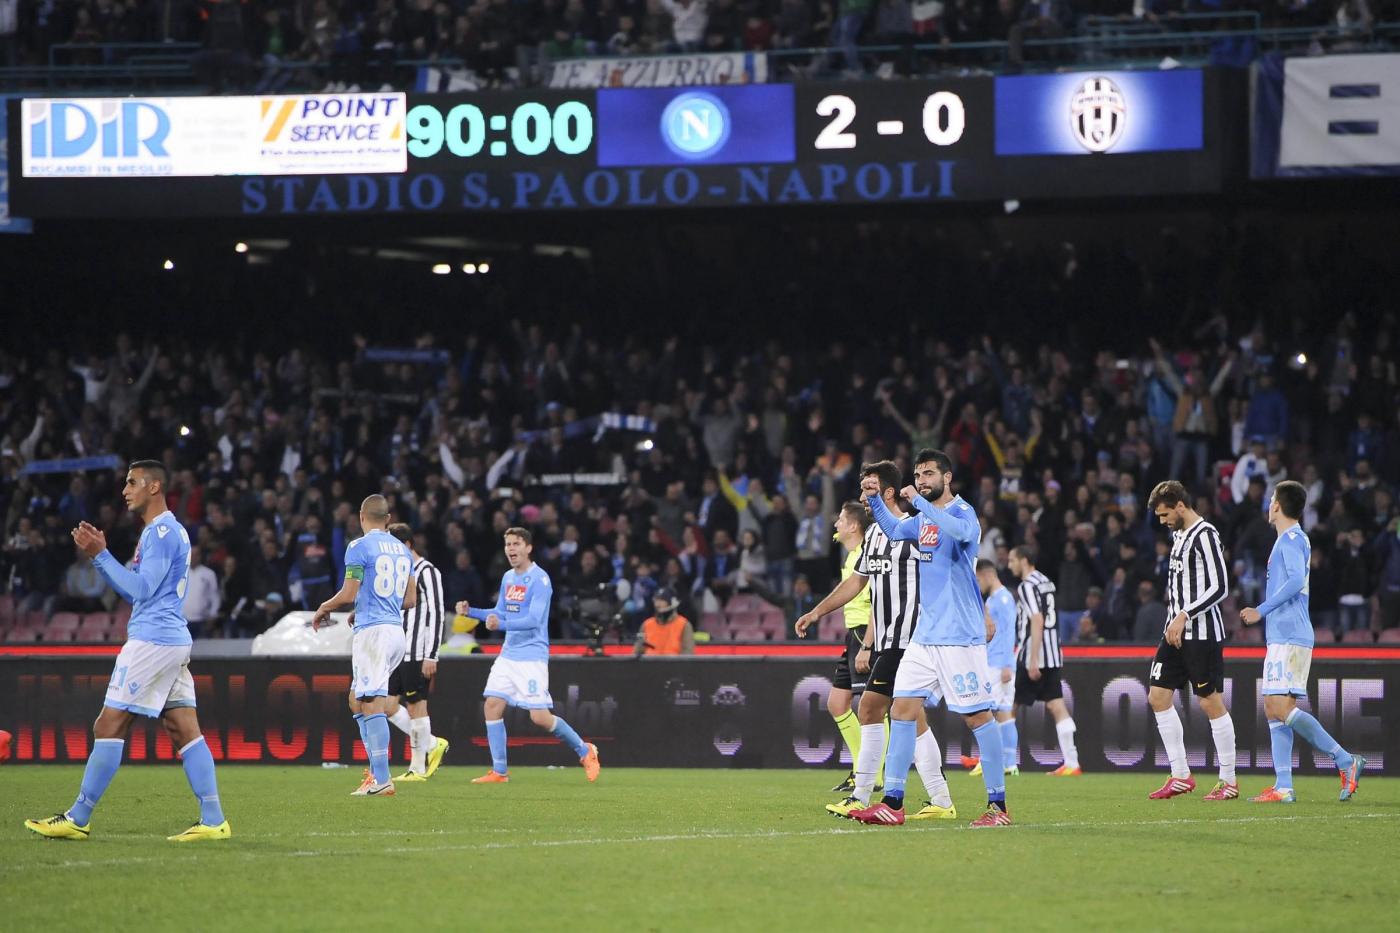 Napoli vs Juventus - Serie A Tim 2013/2014